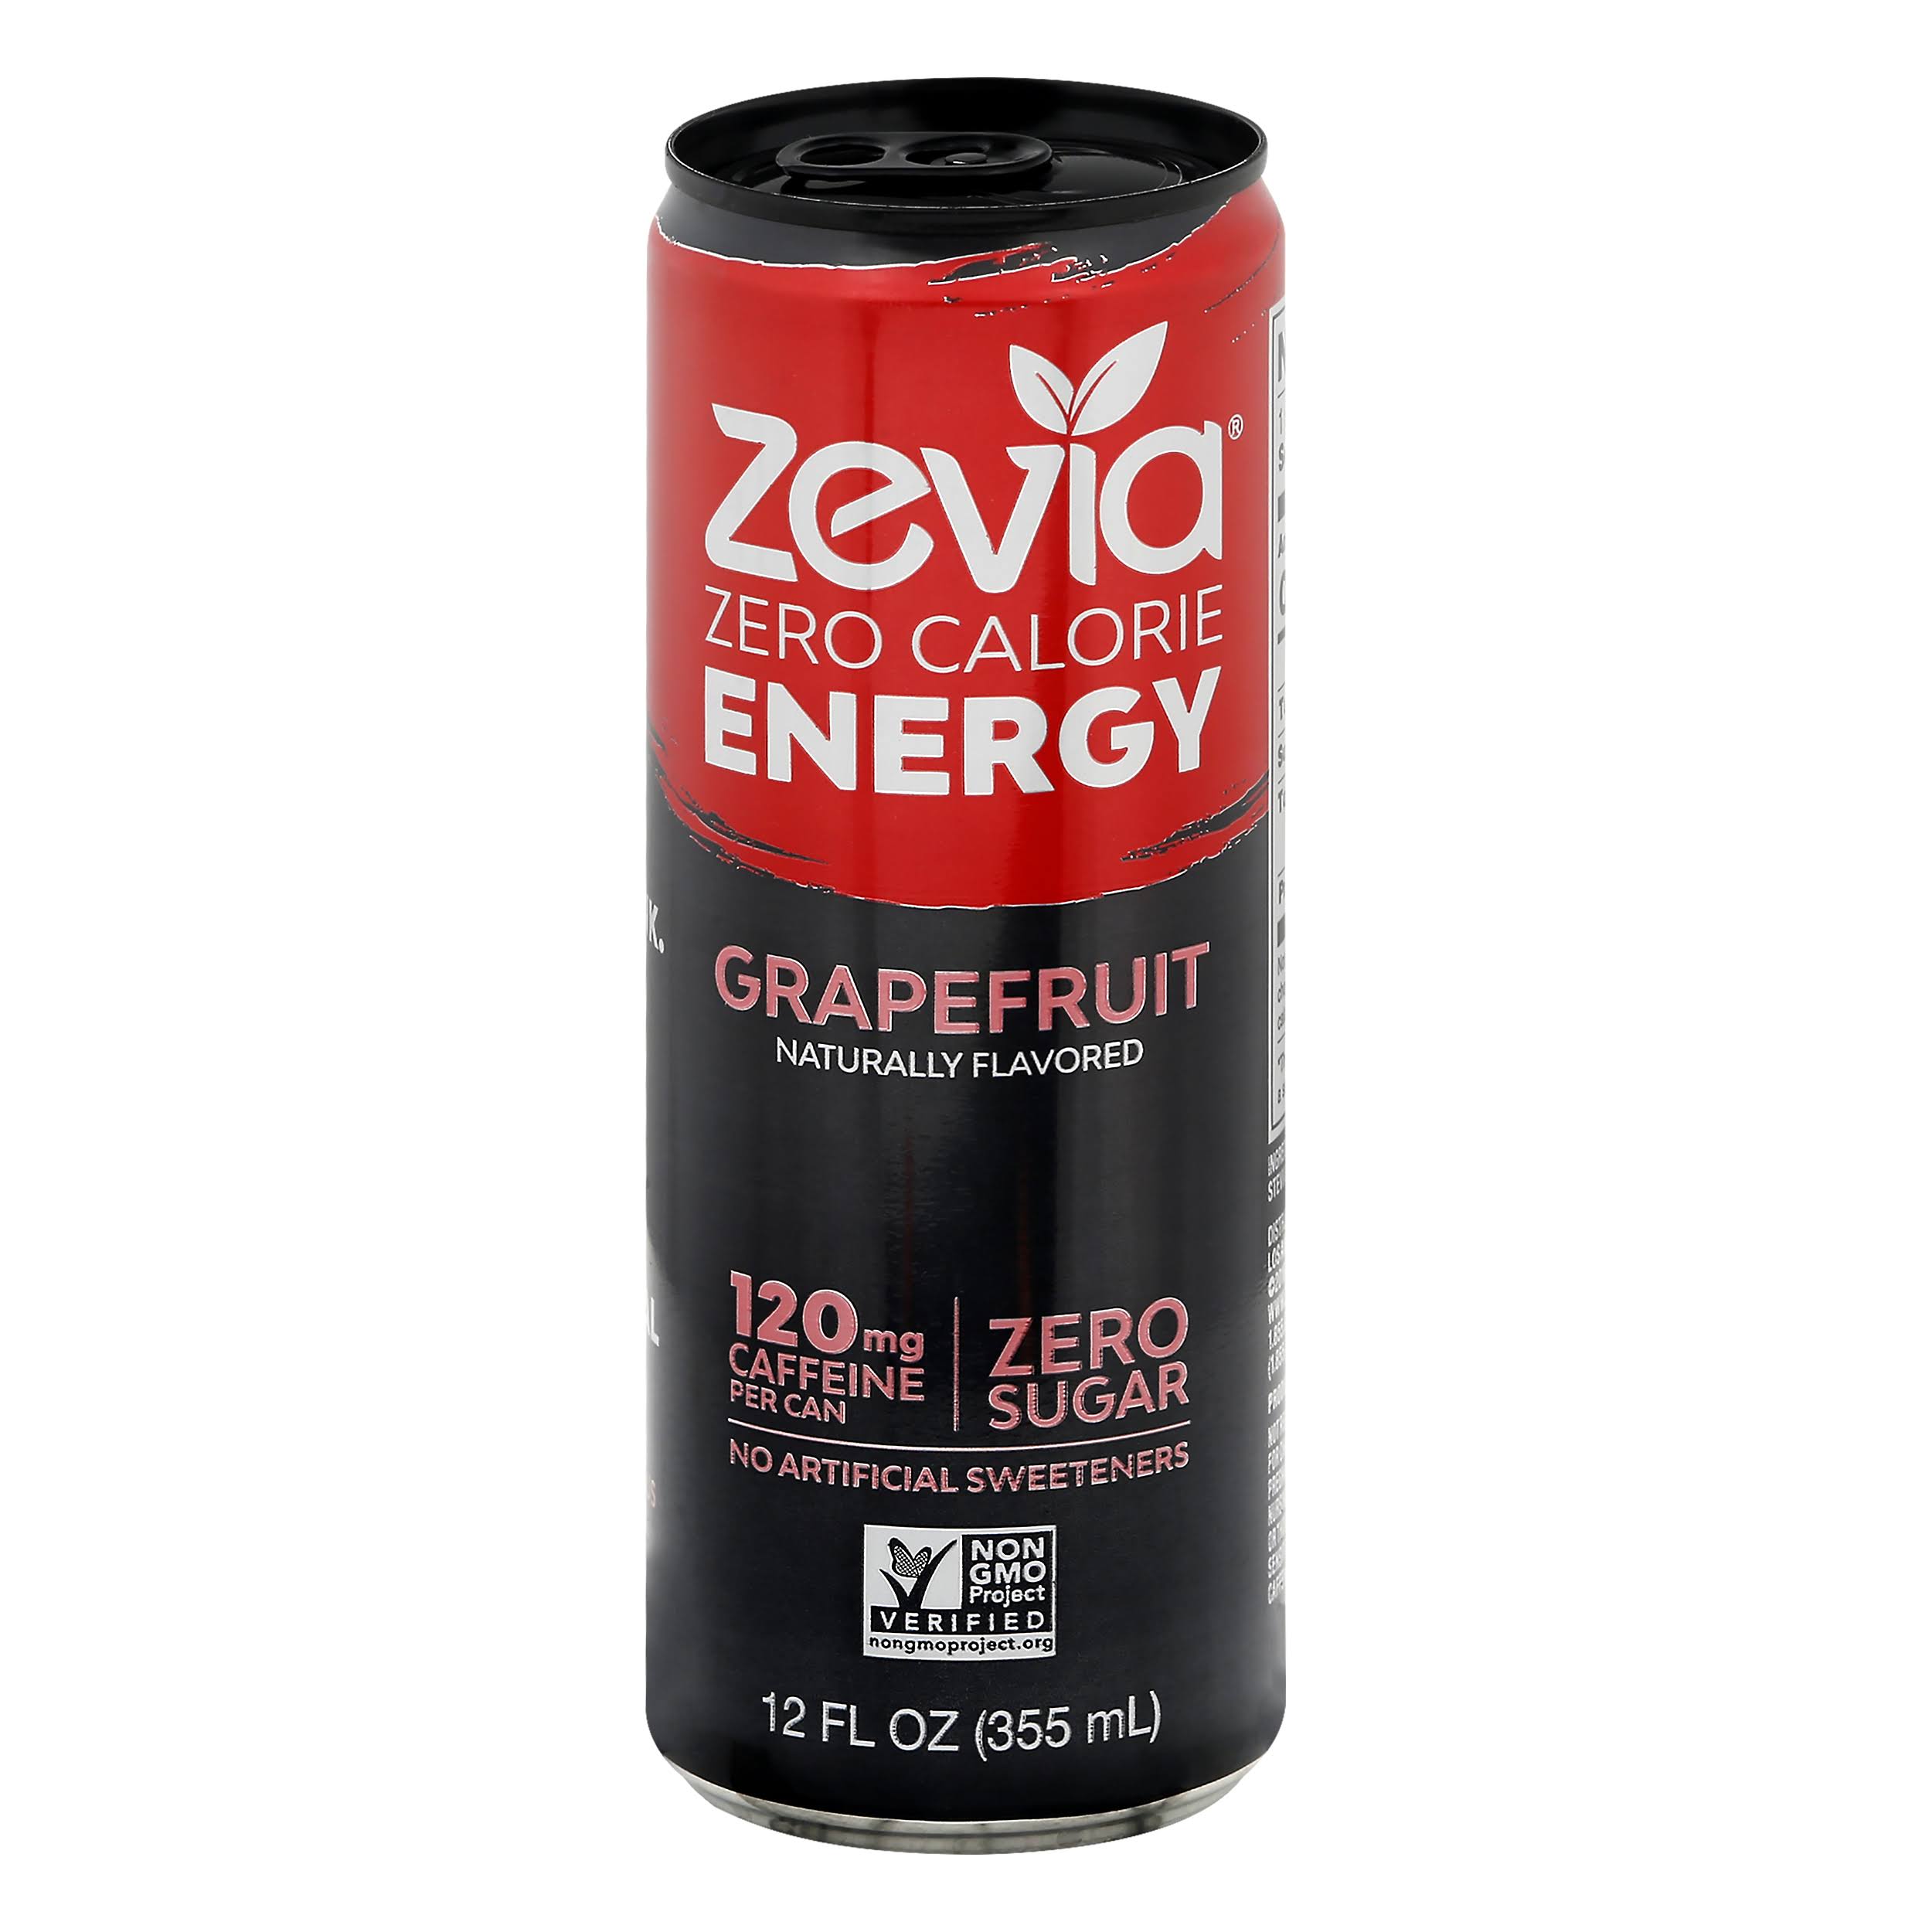 Zevia Zero Calorie Energy Drink - Grapefruit - Case of 12 - 12 Fl oz